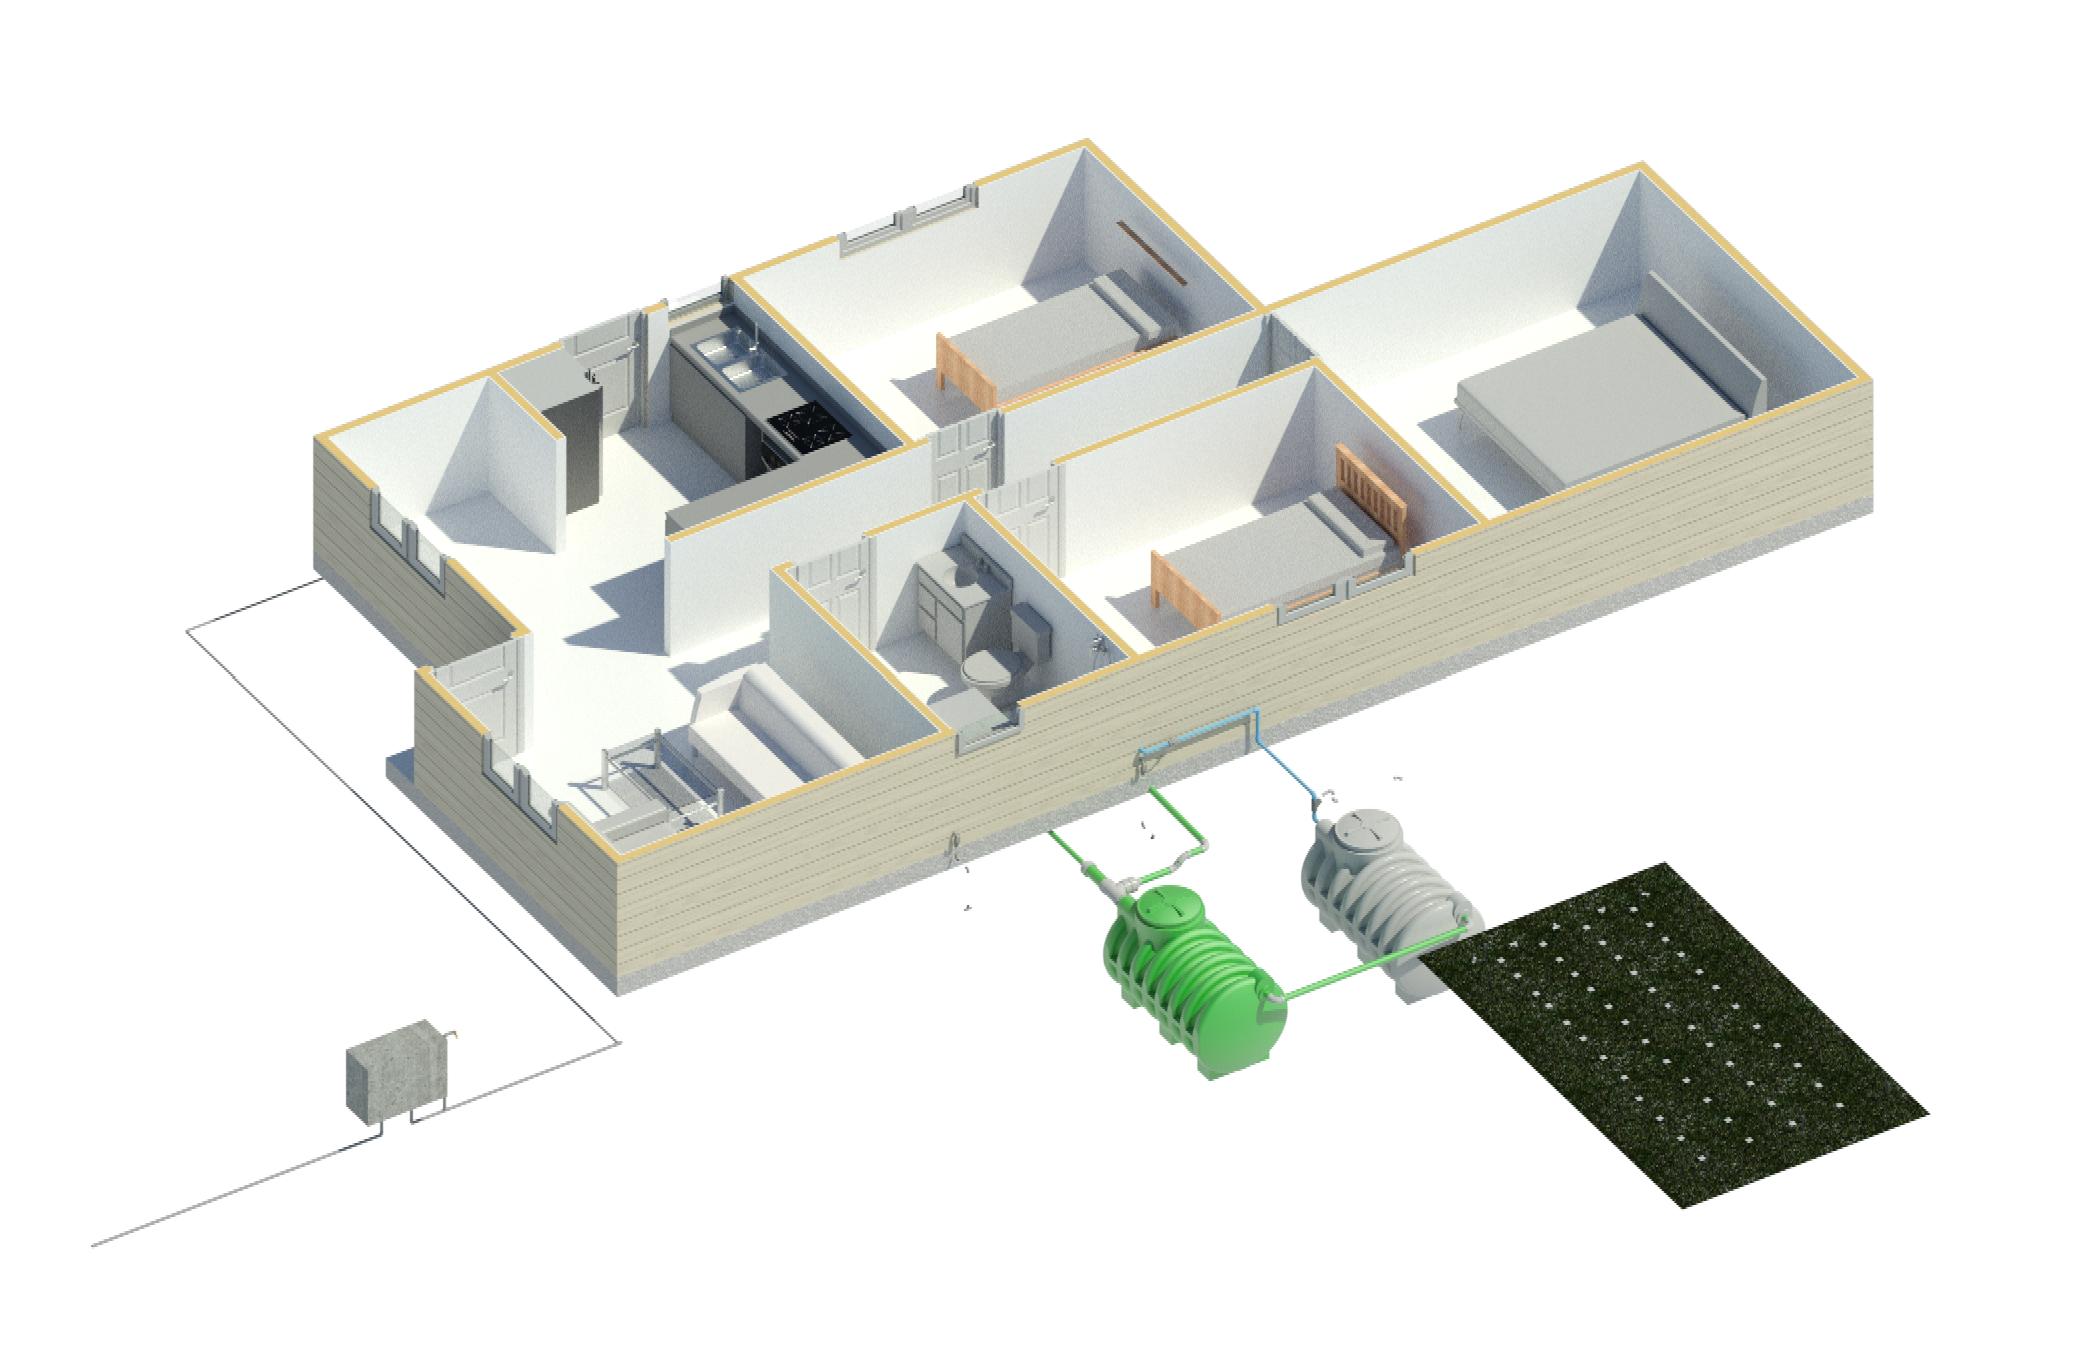 Kit para viviendas hidroeficientes con reutilización de agua